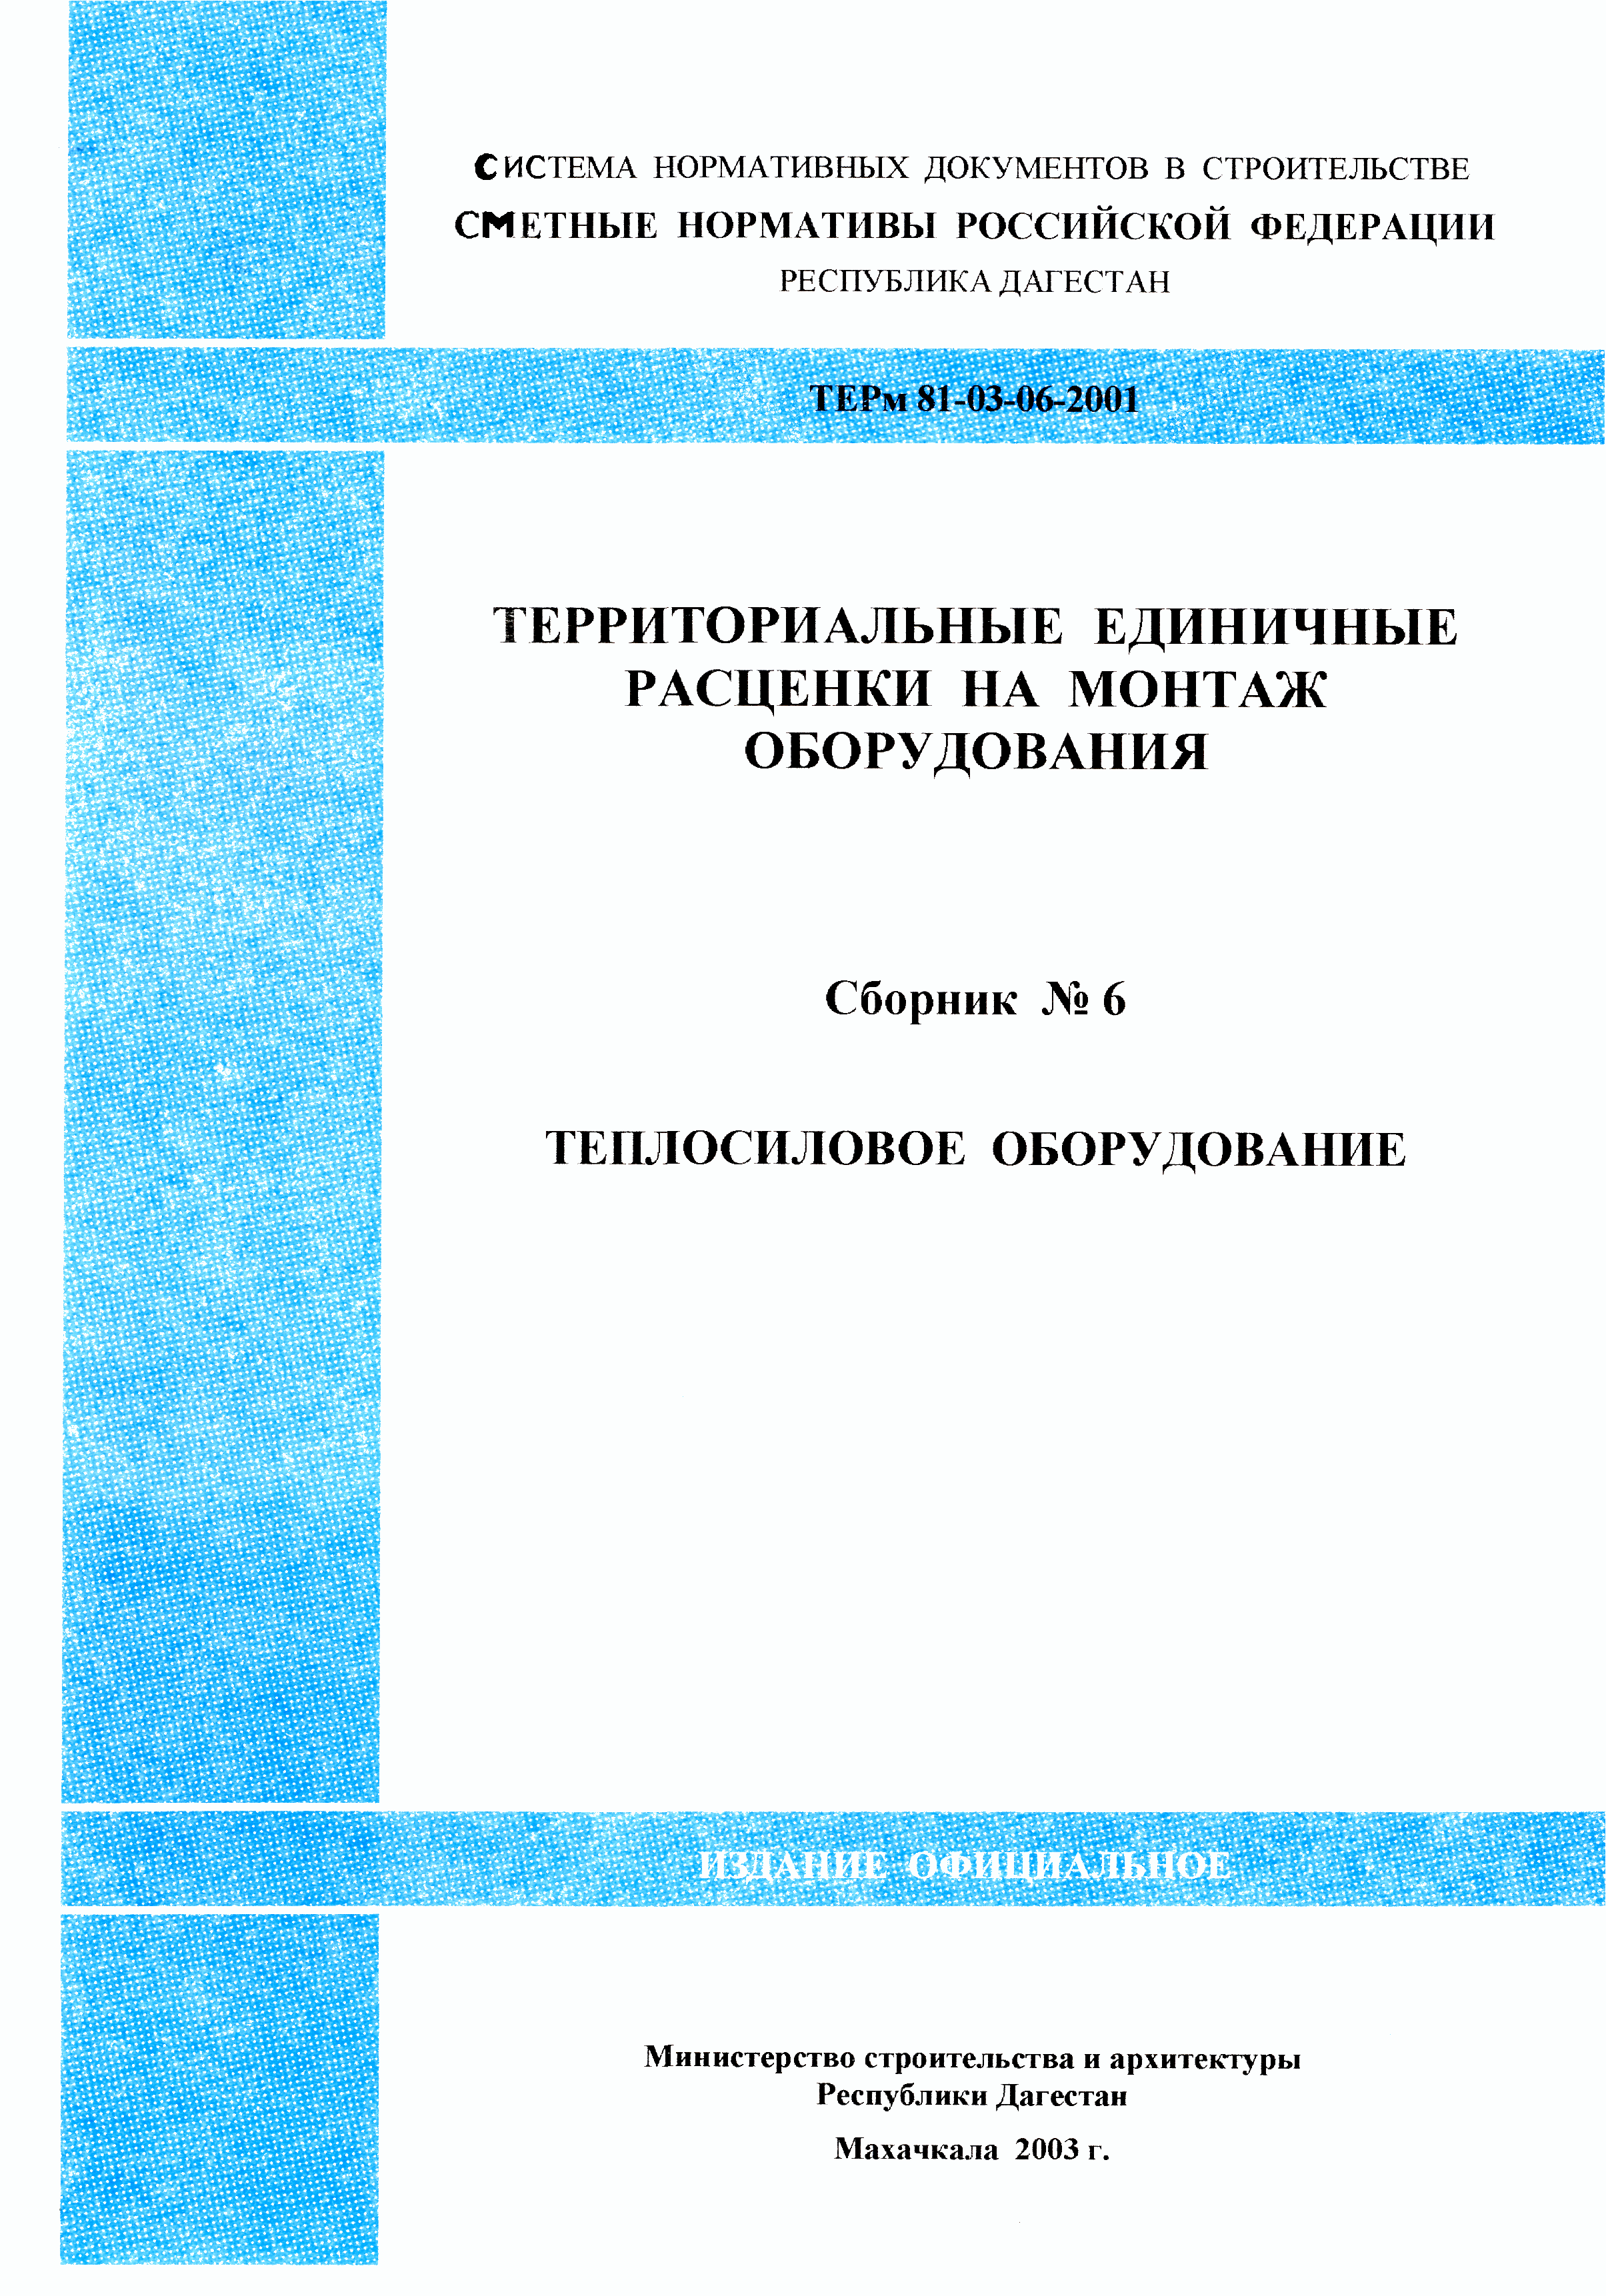 ТЕРм Республика Дагестан 2001-06